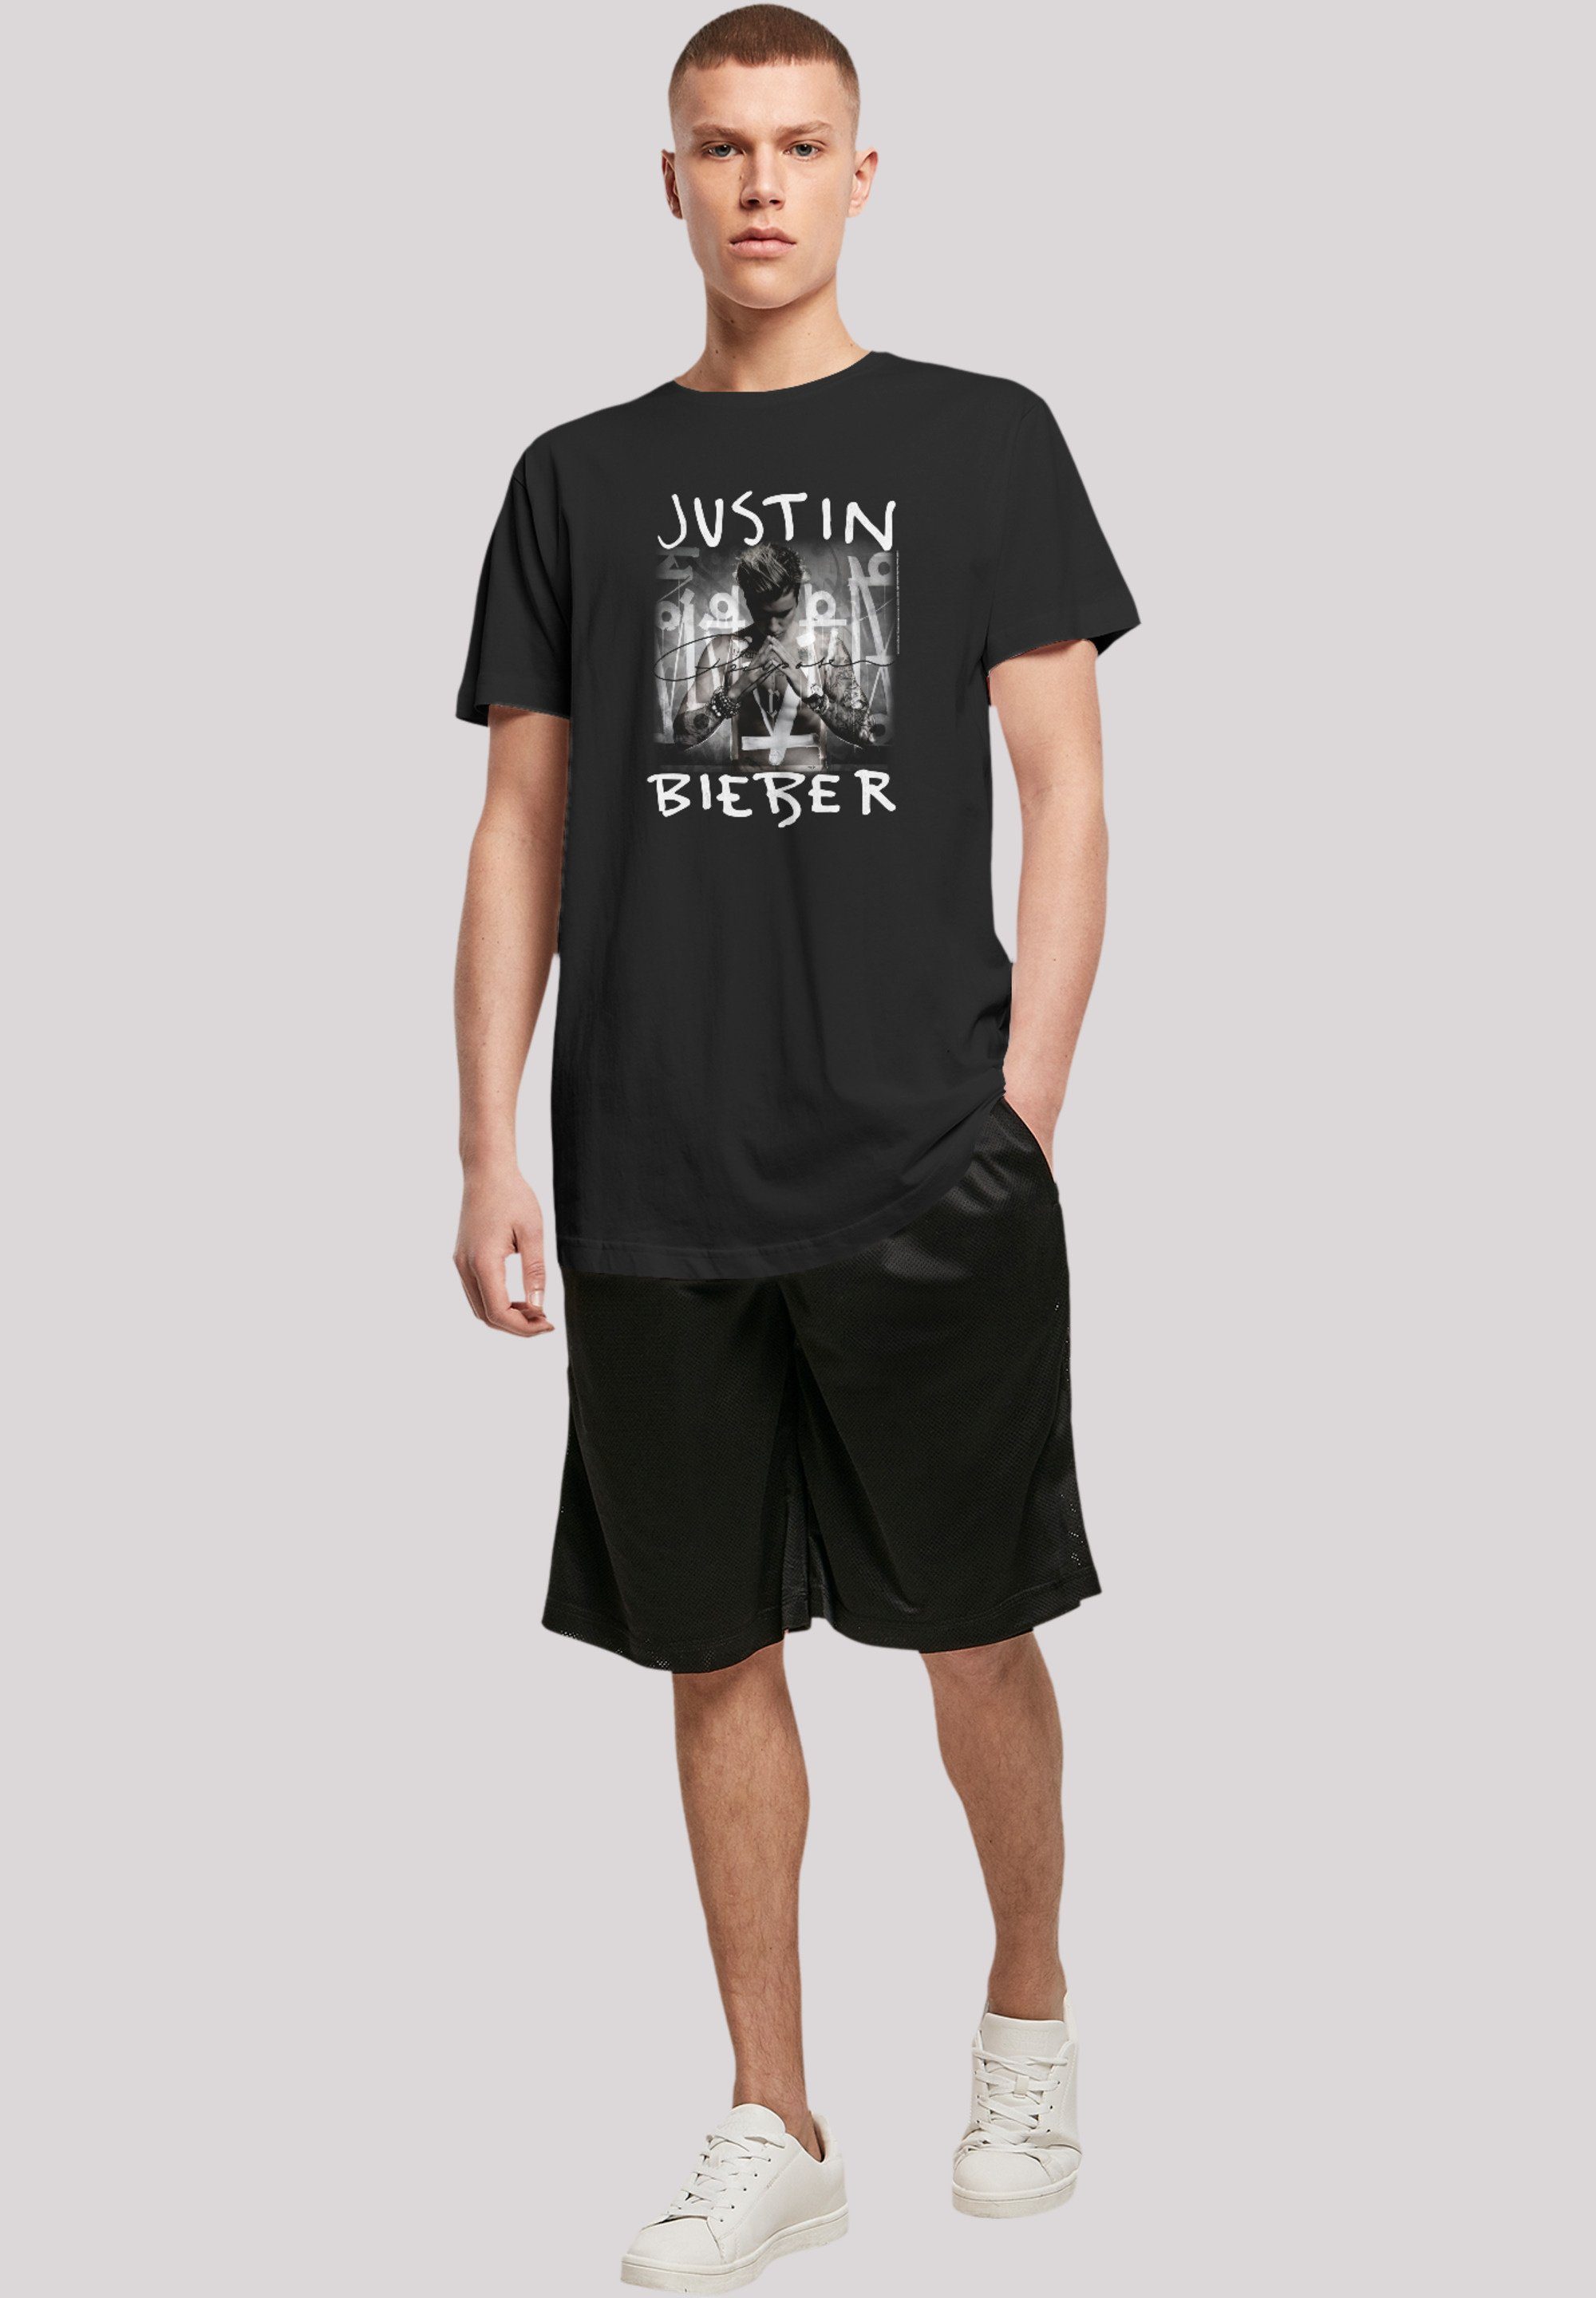 Premium Album Justin F4NT4STIC Qualität, T-Shirt Purpose Musik, Bieber By Off Cover Rock